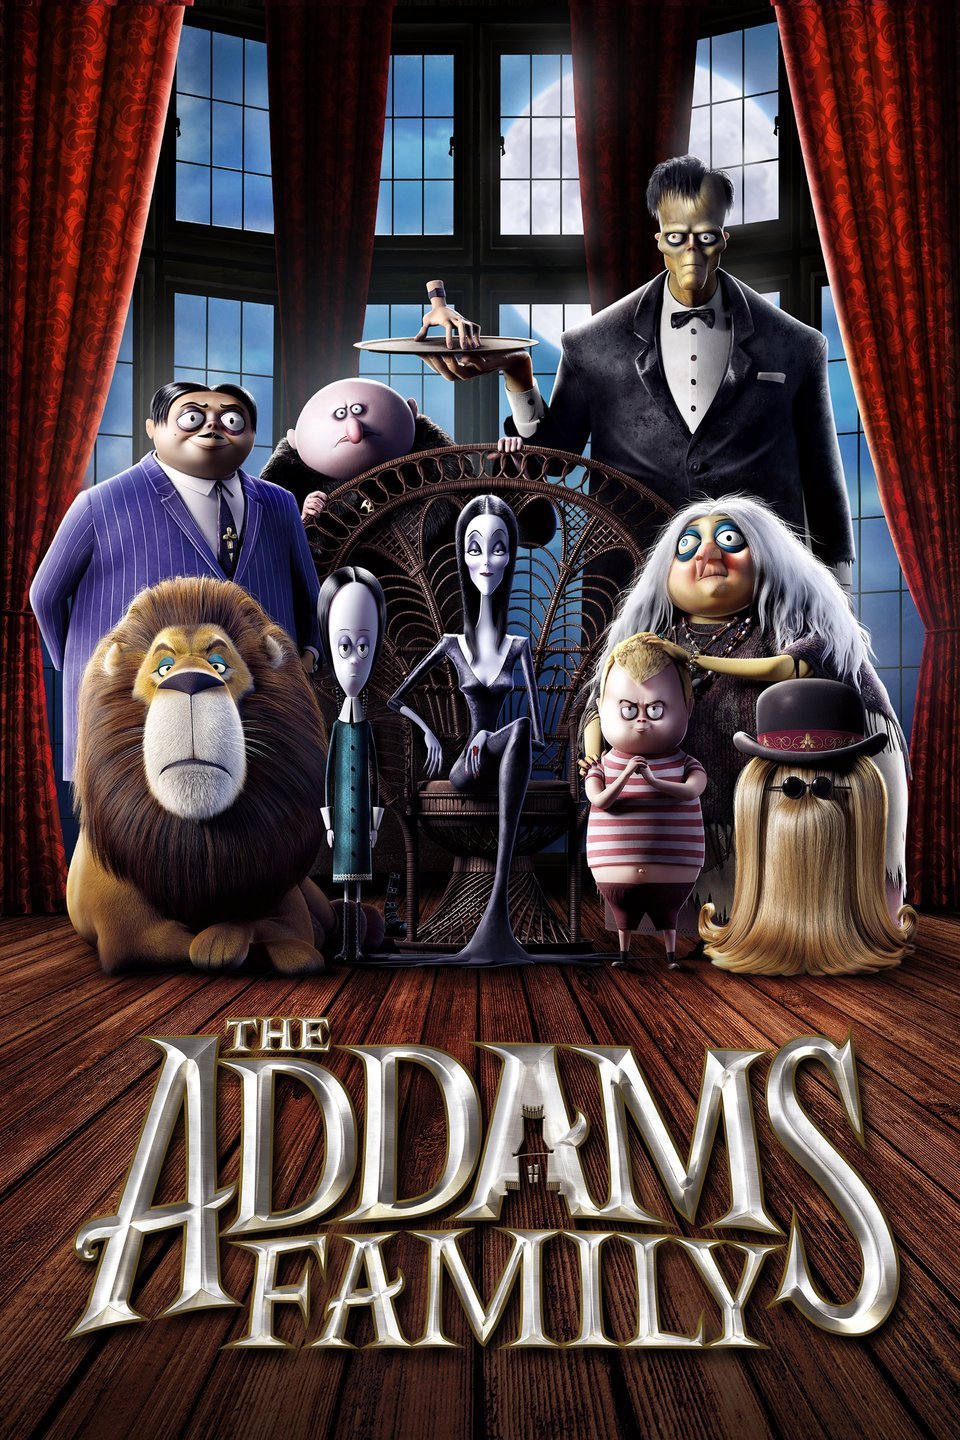 [MINI Super-HQ] The Addams Family (2019) ตระกูลนี้ผียังหลบ [1080p] [พากย์ไทย DTS + เสียงอังกฤษ DTS] [บรรยายไทย + อังกฤษ] [เสียงไทย + ซับไทย] [PANDAFILE]